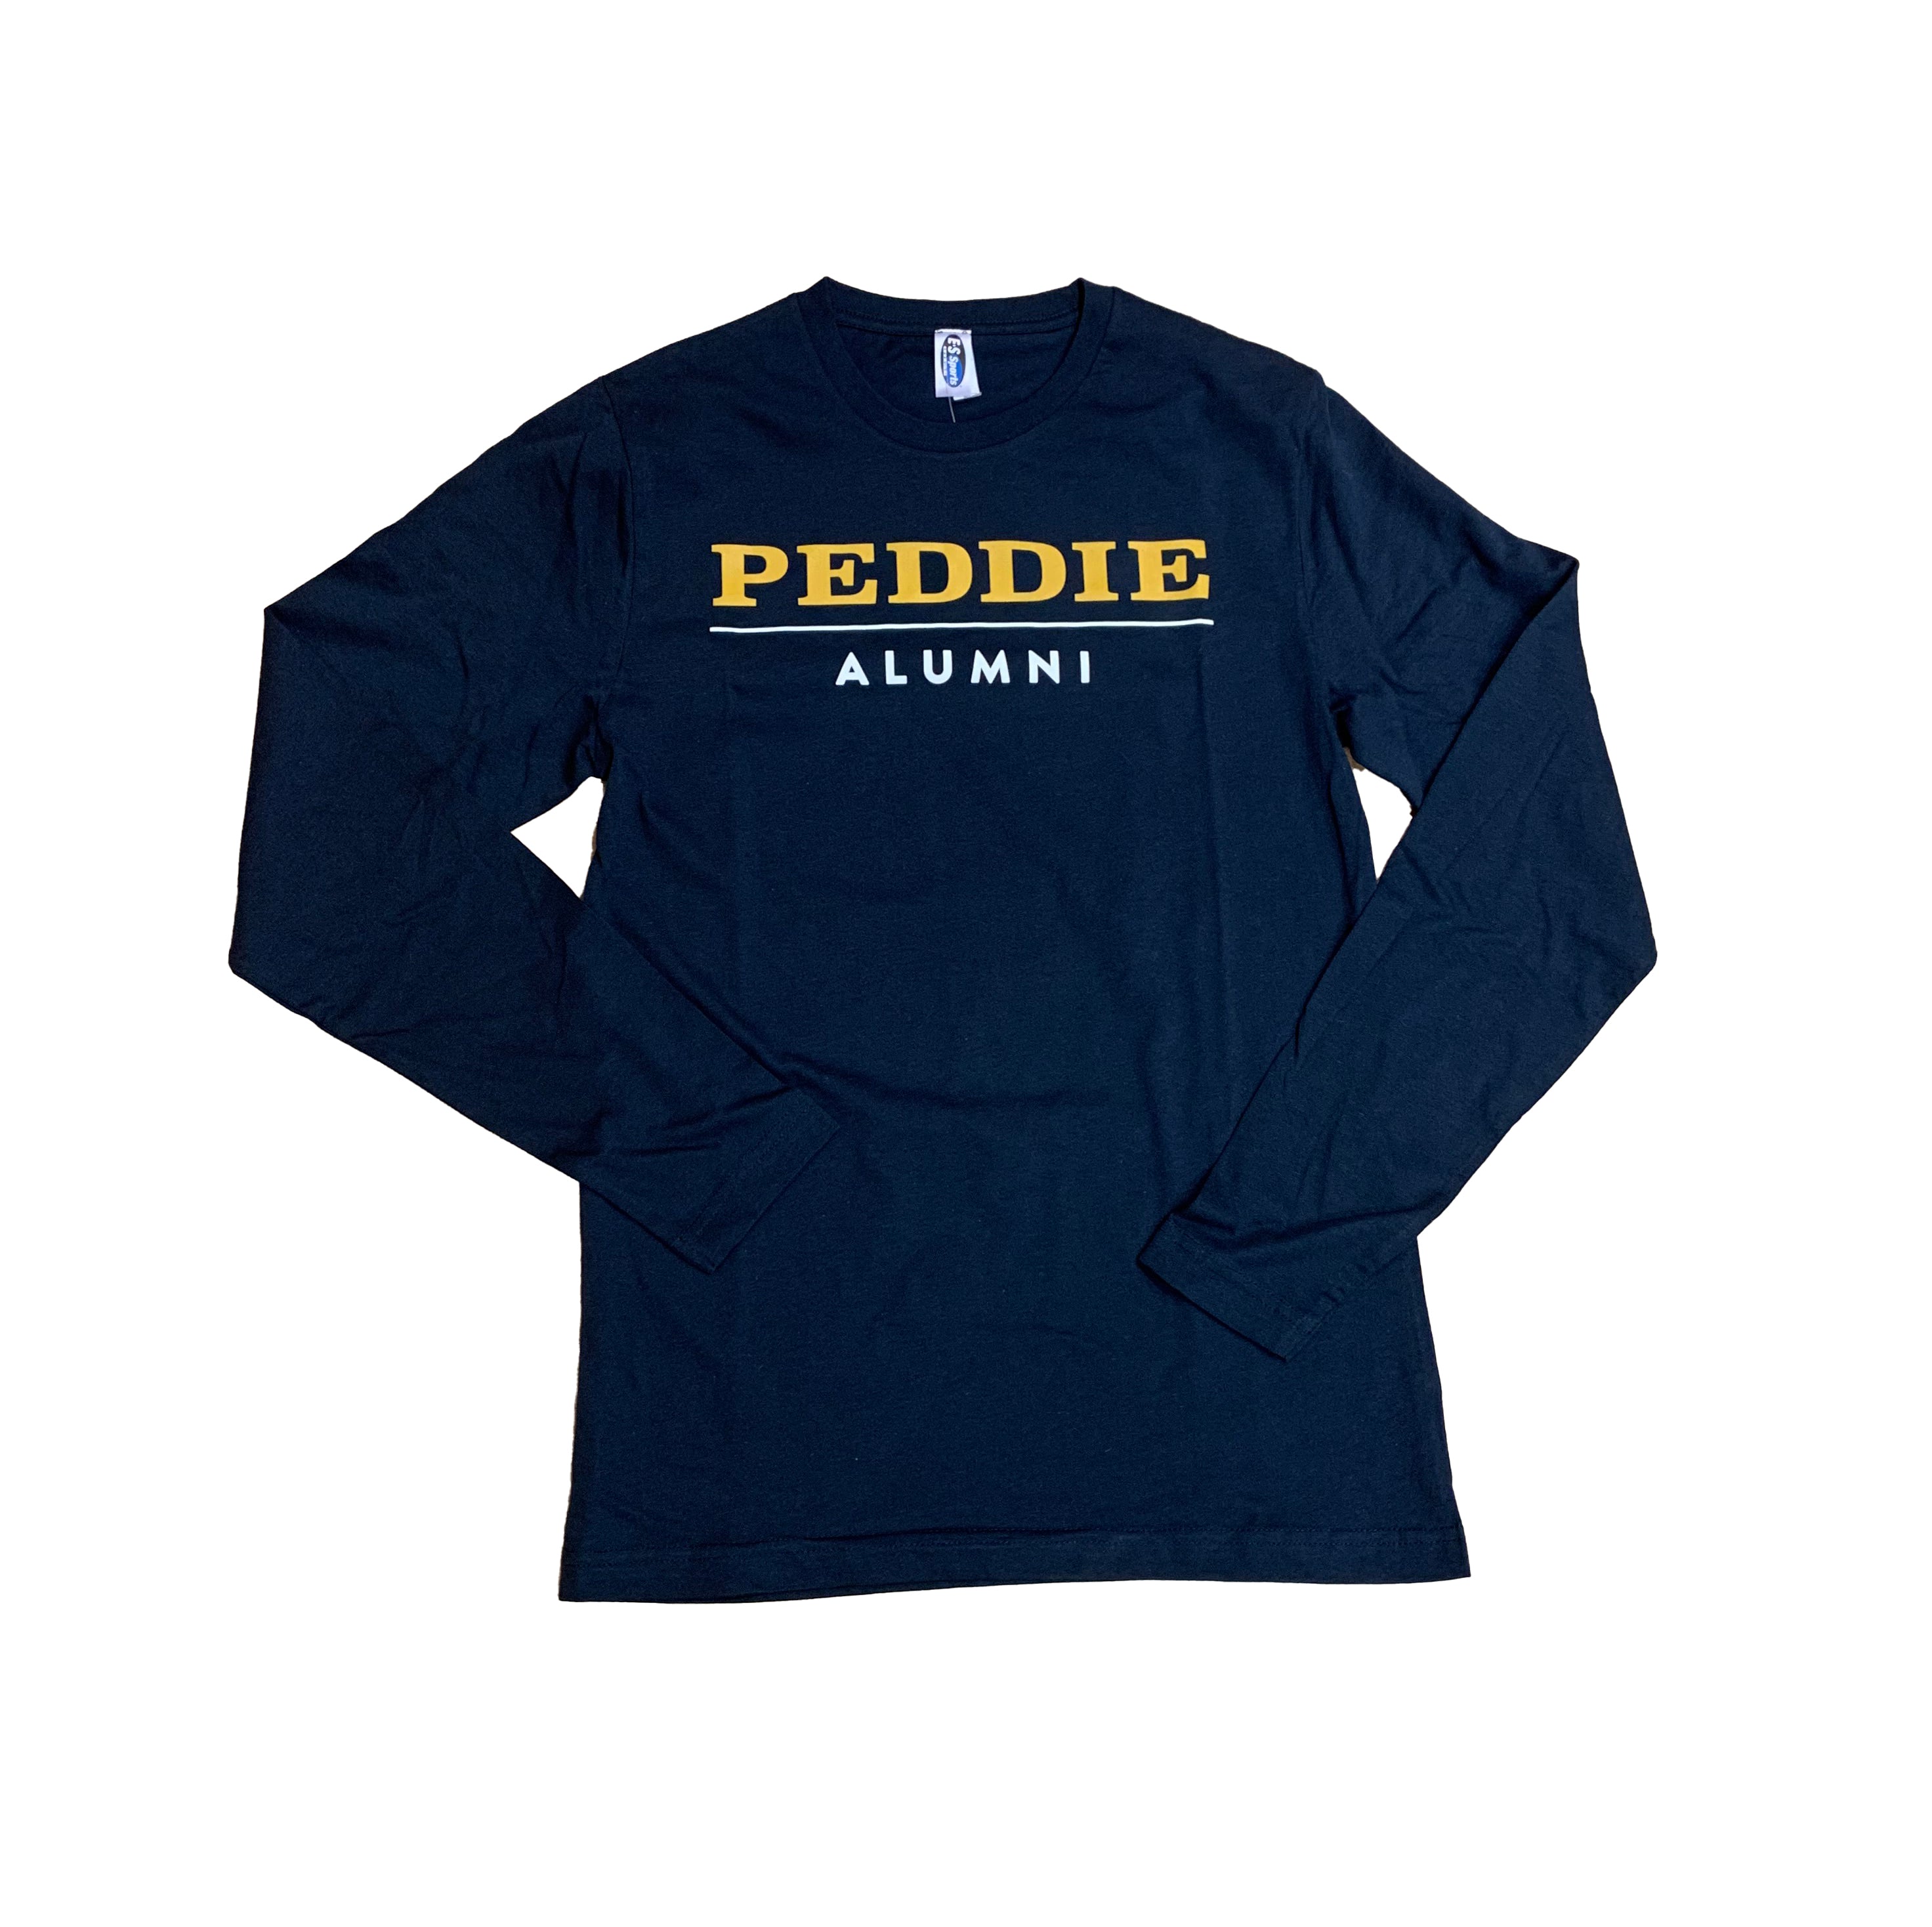 Peddie Alumni Tee Shirt